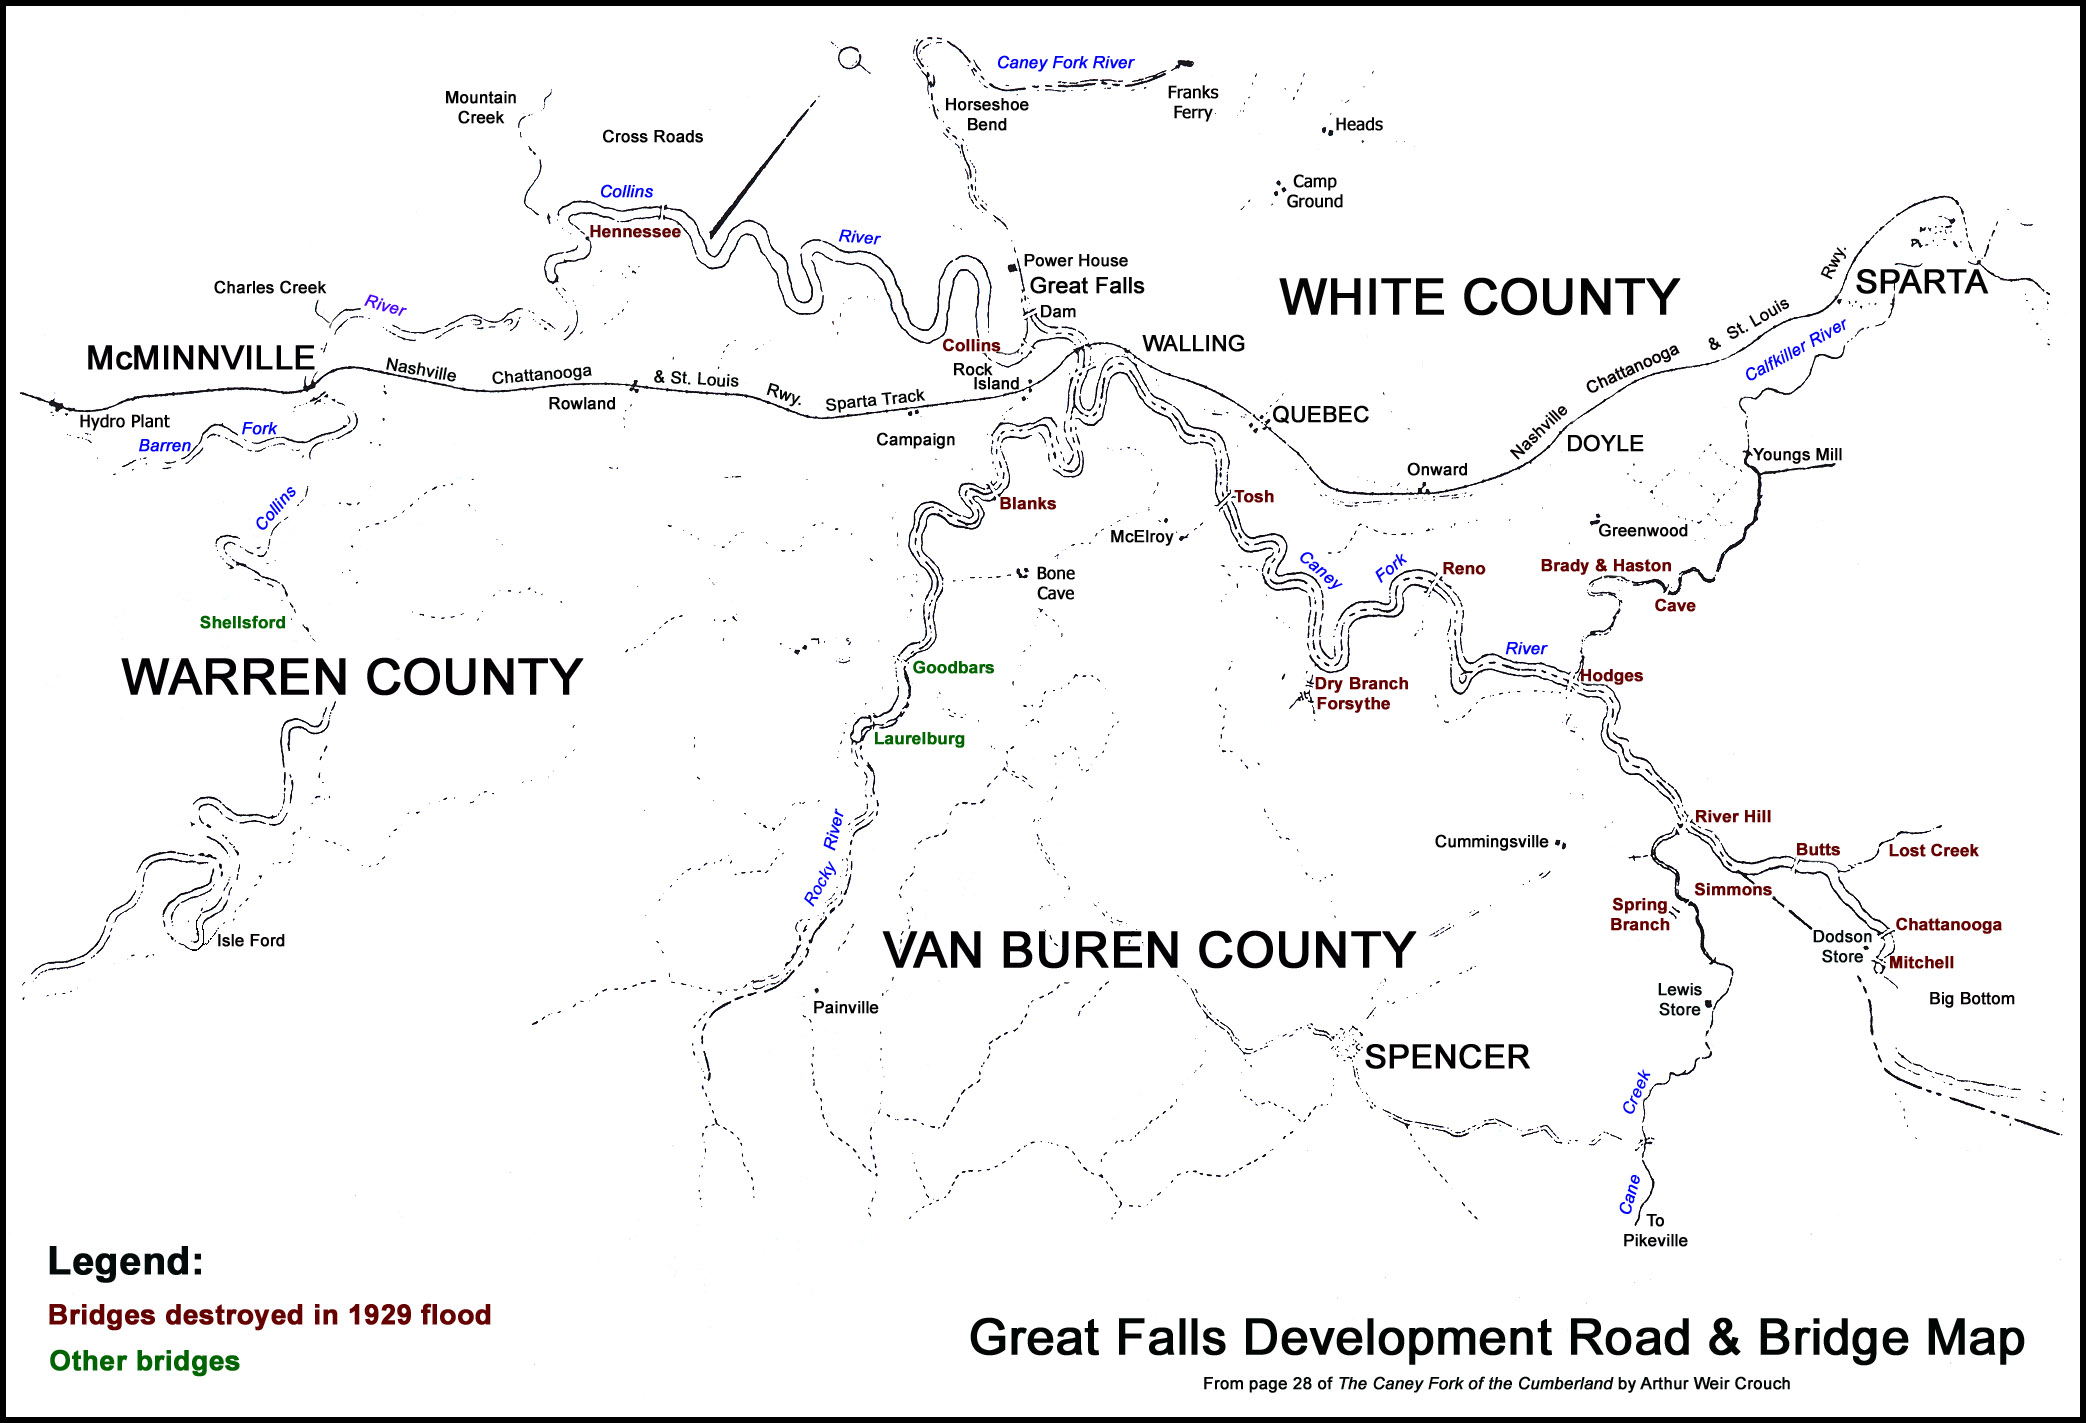 Great Falls Development - Bridges & Roads Map